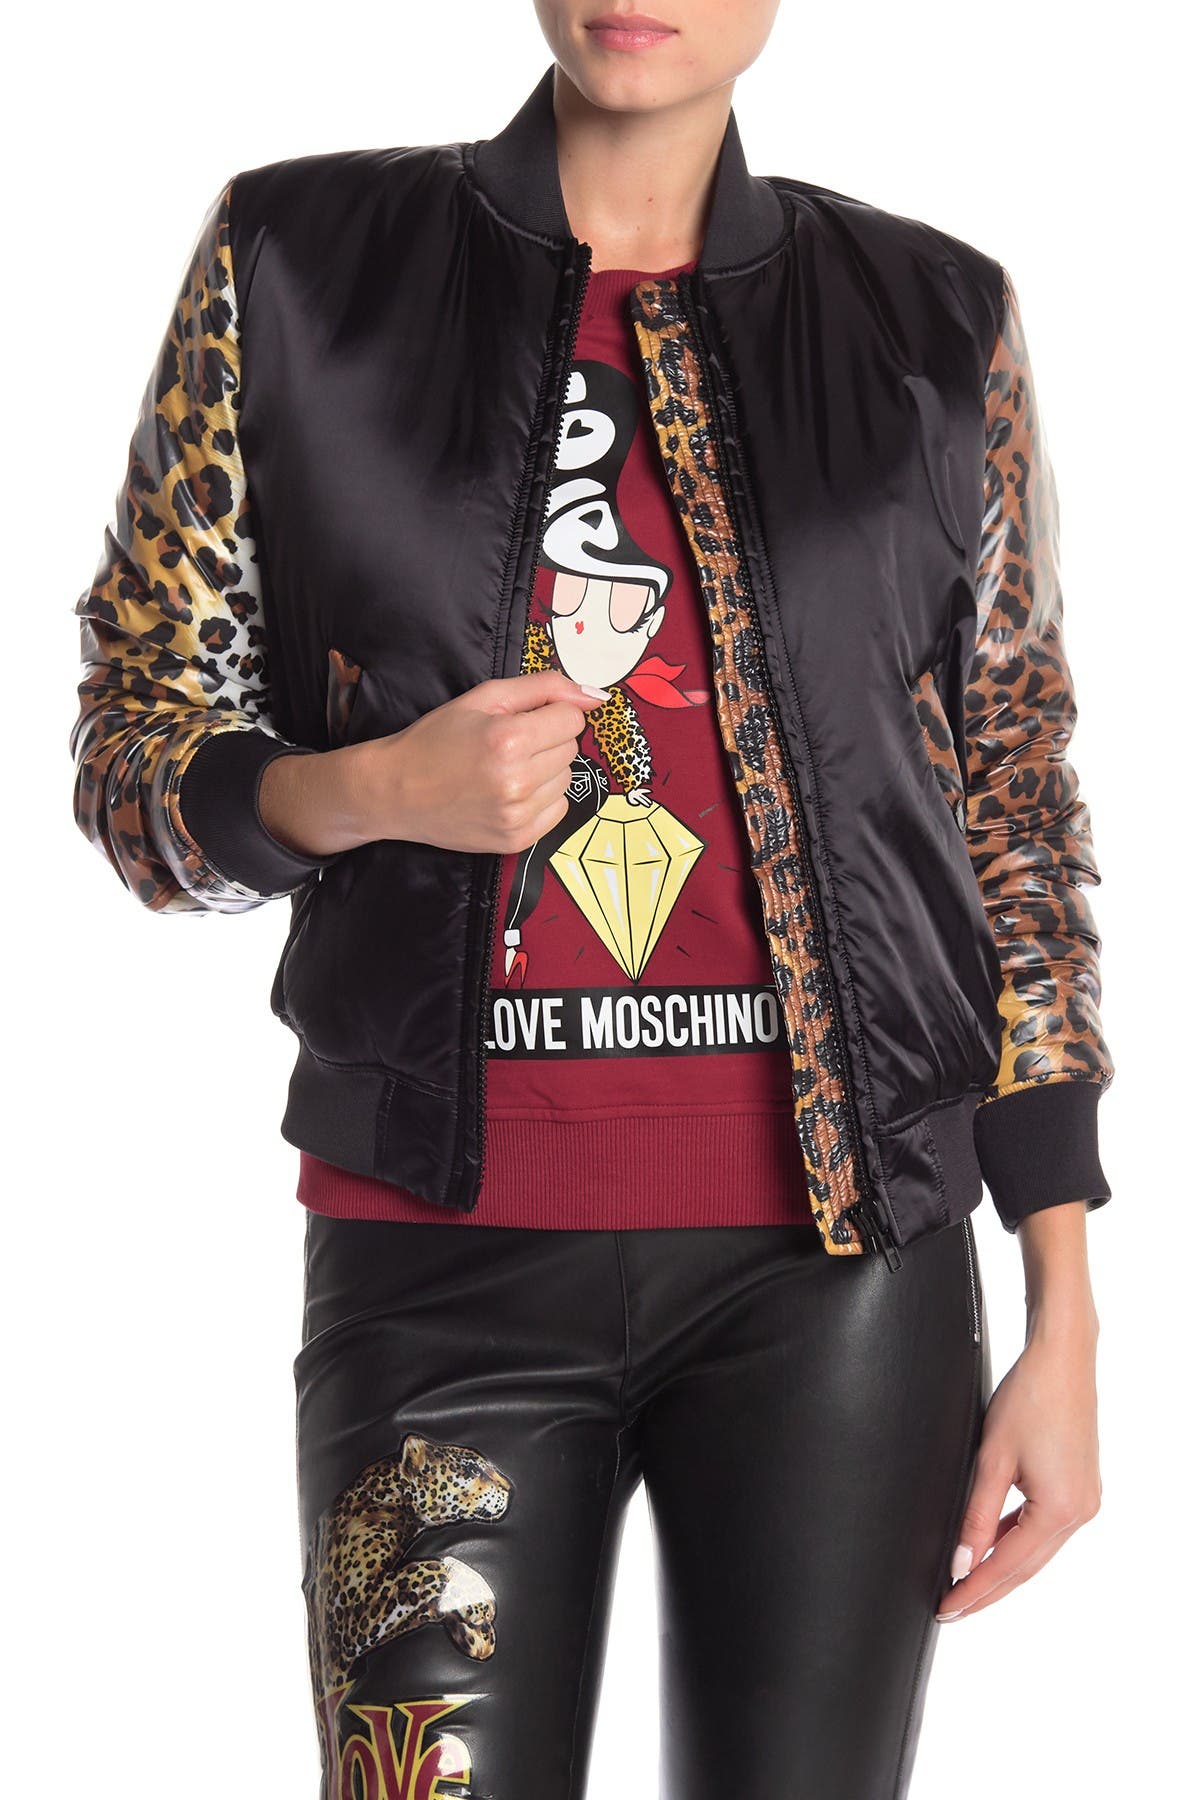 love moschino jacket